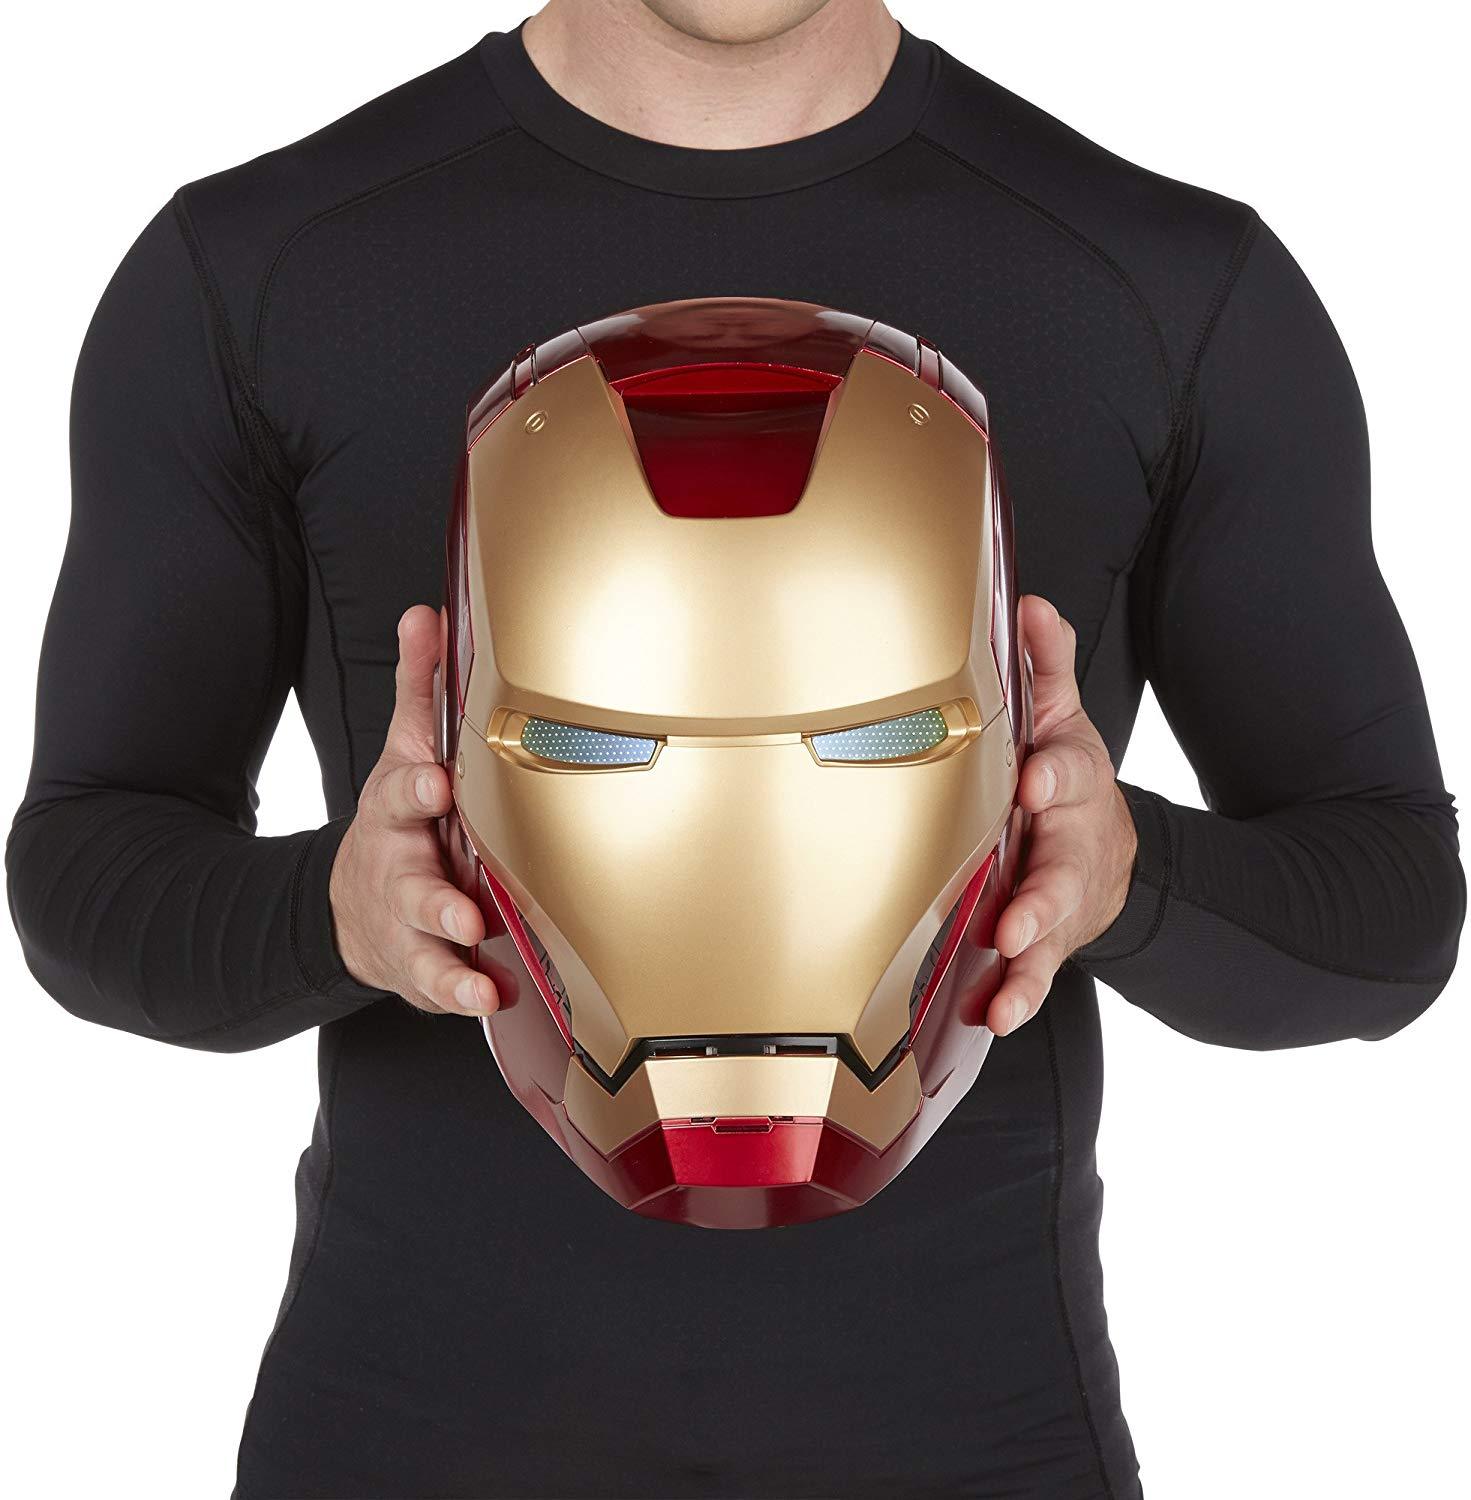 Iron Man Super Edition Helmet Replica Made Of Plastic   The IronSuit